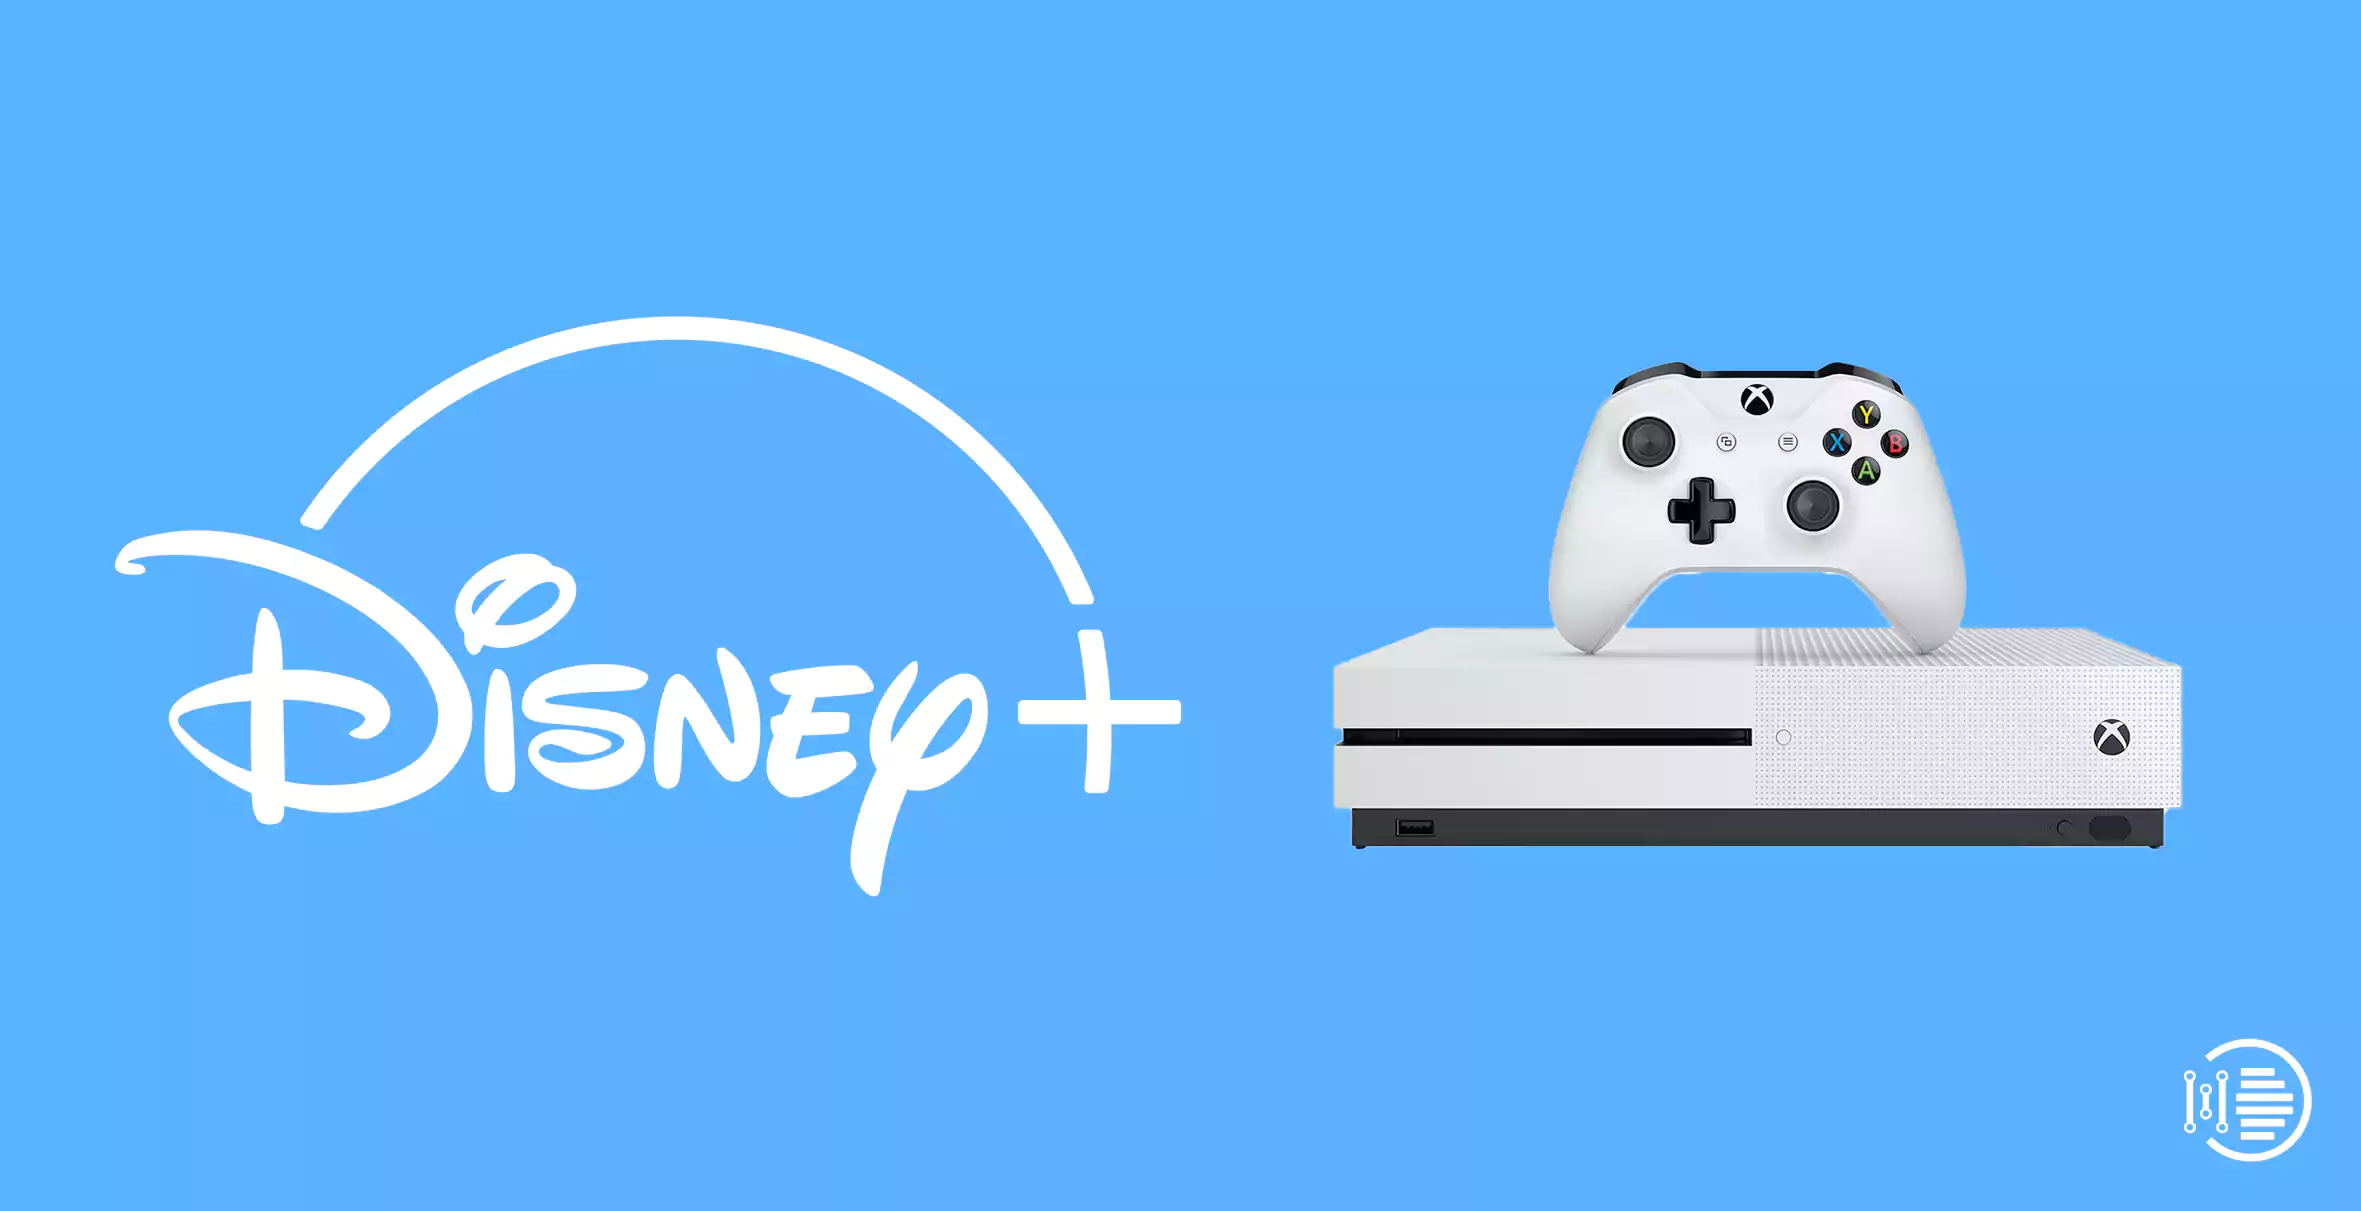 Download Disney Plus on Xbox One easily 2022